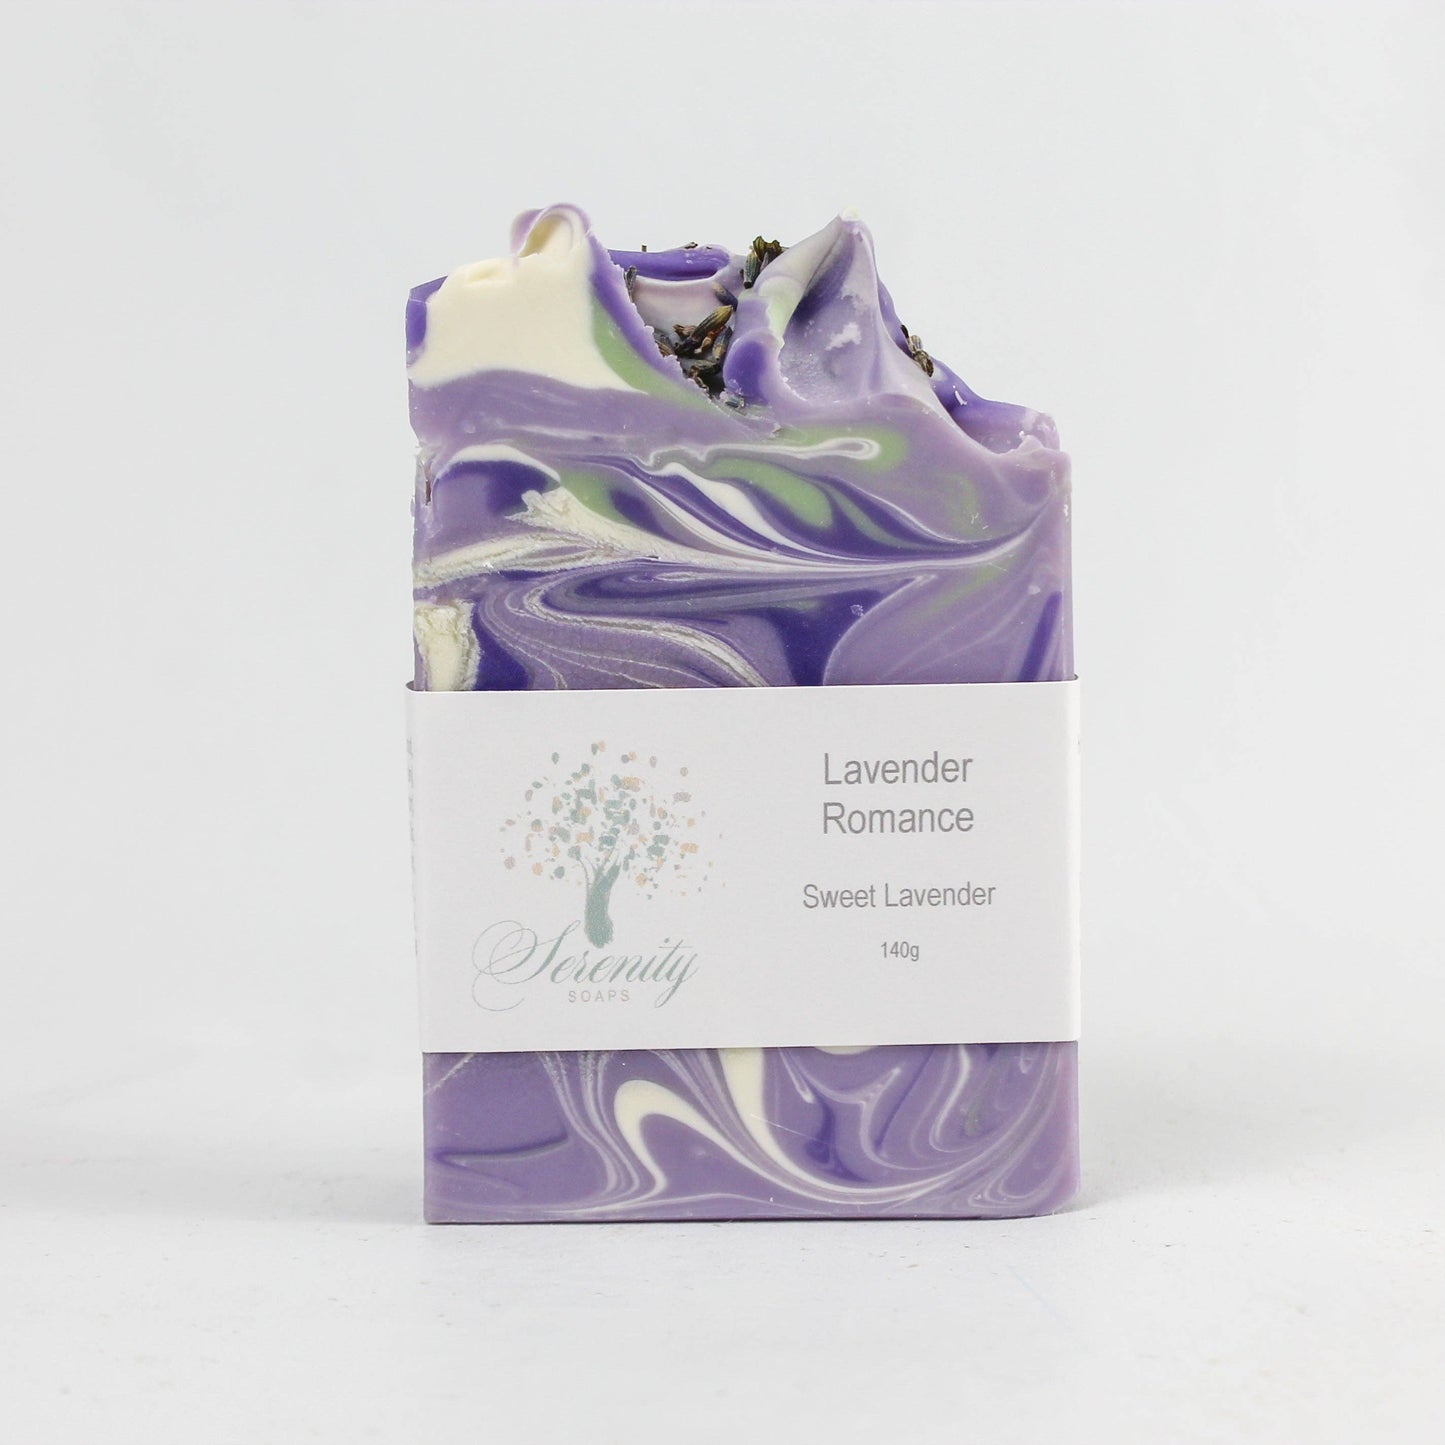 Serenity Soaps - Lavender Romance Soap